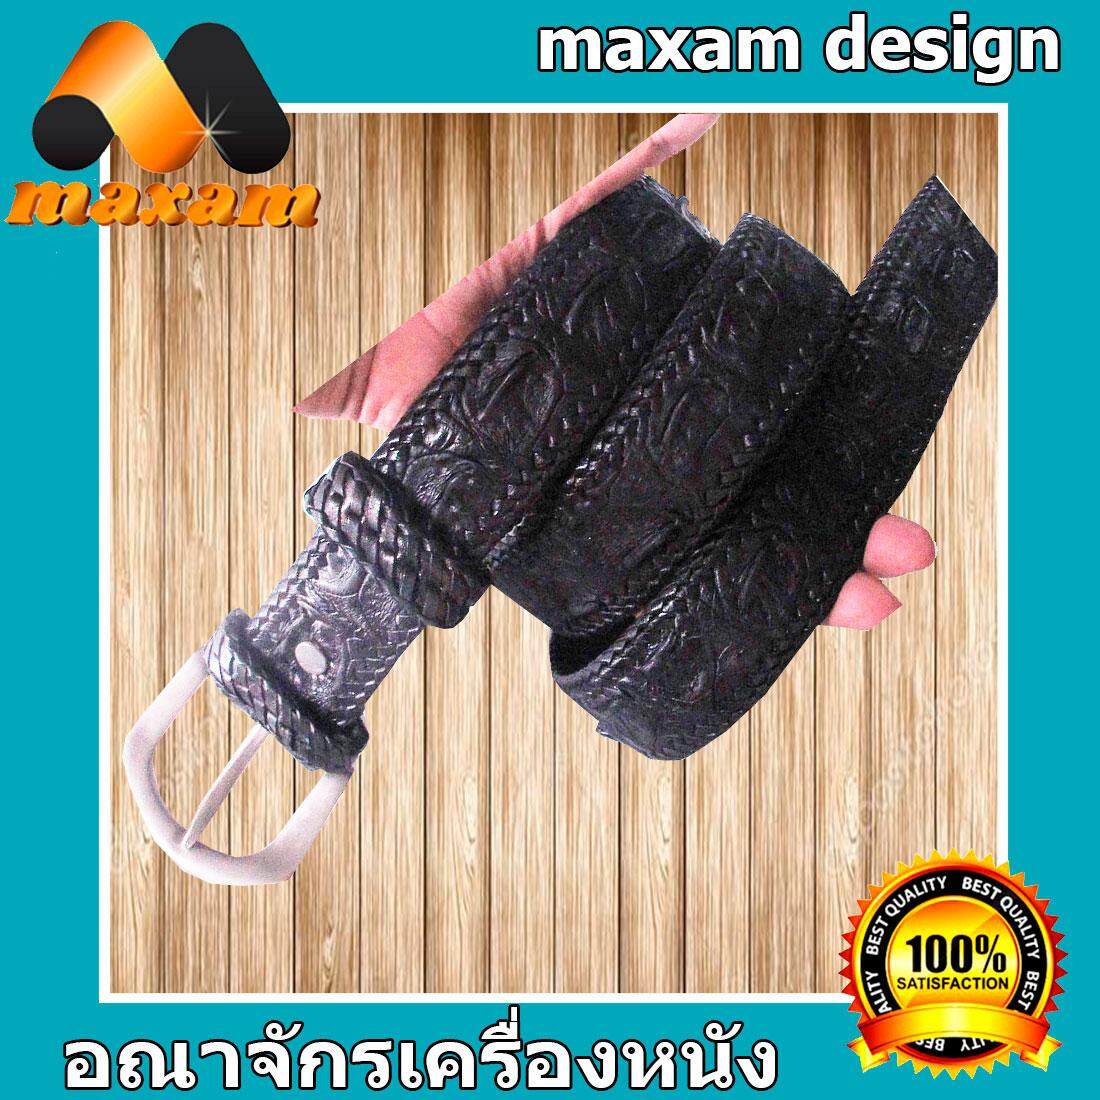 maxam design  เข็มขัดหนังจระเข้แท้ For Mens Ladies Genuine Crocodile Leather Belt And Buckle  เส้นเดียวเอาอยู่ เข็มขัดหนังจระเข้แท้100% ยาวตลอดเส้น50นิ้ว     maxam design